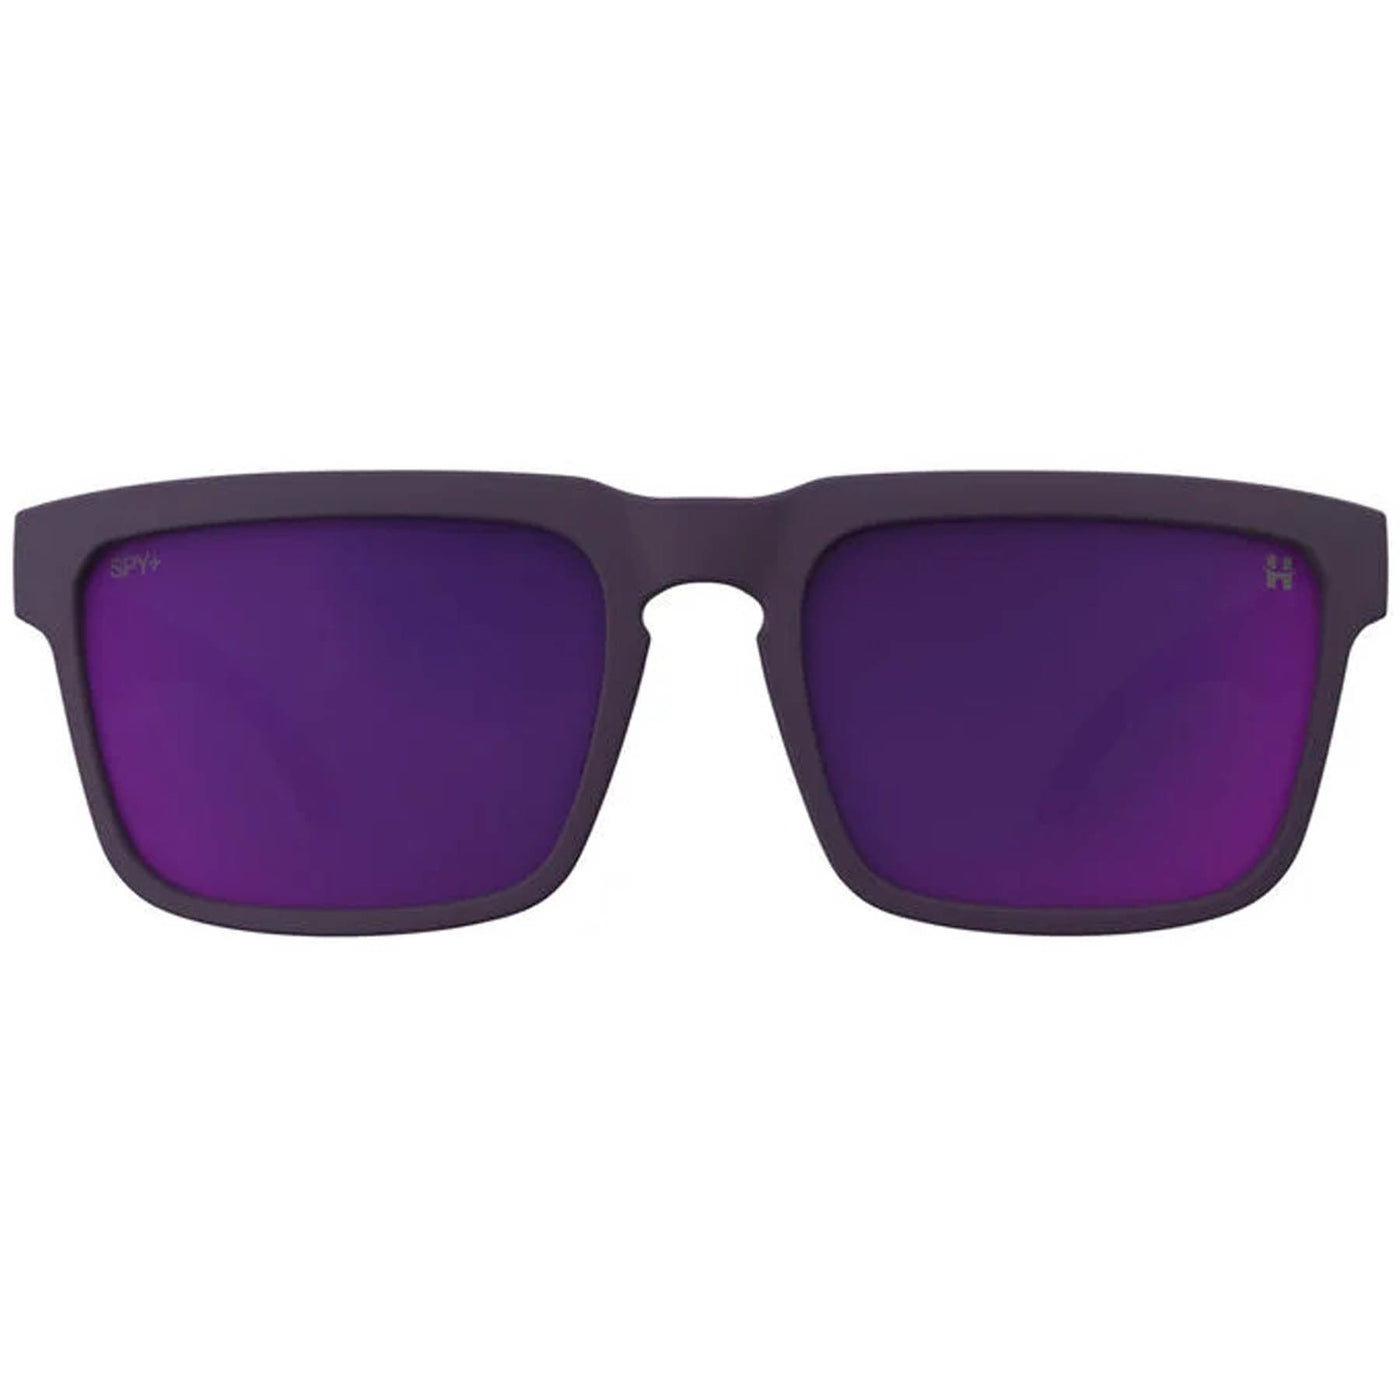 SPY HELM Sunglasses, Happy Lens - Dark Purple 8Lines Shop - Fast Shipping